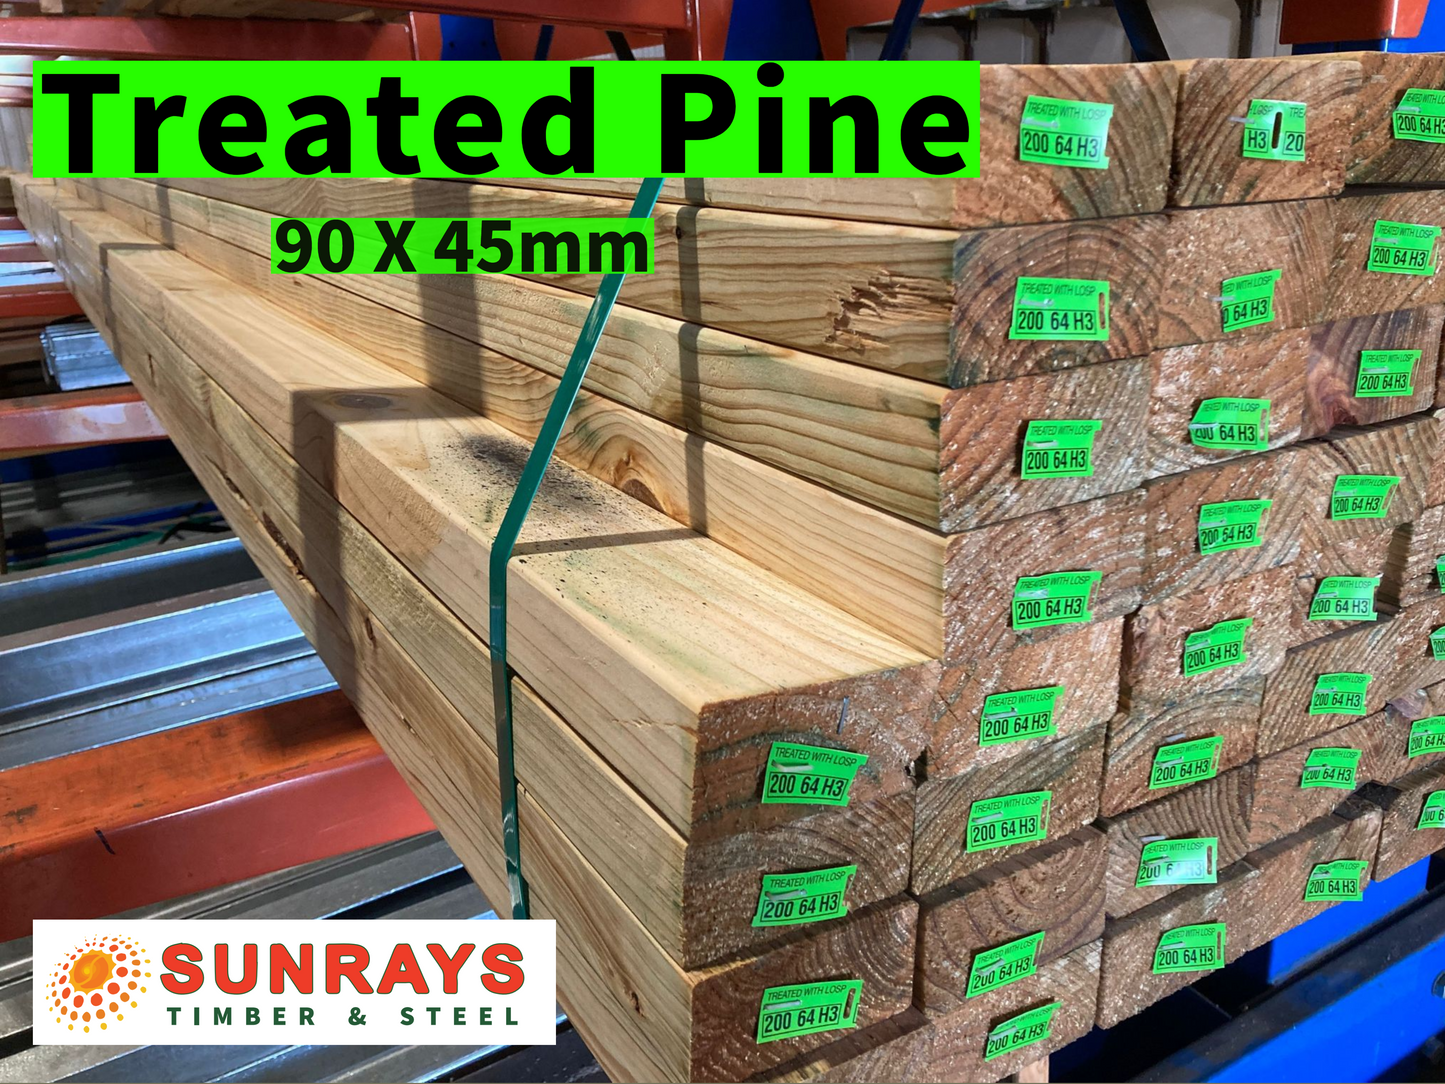 Treated Pine - 90 x 45 mm